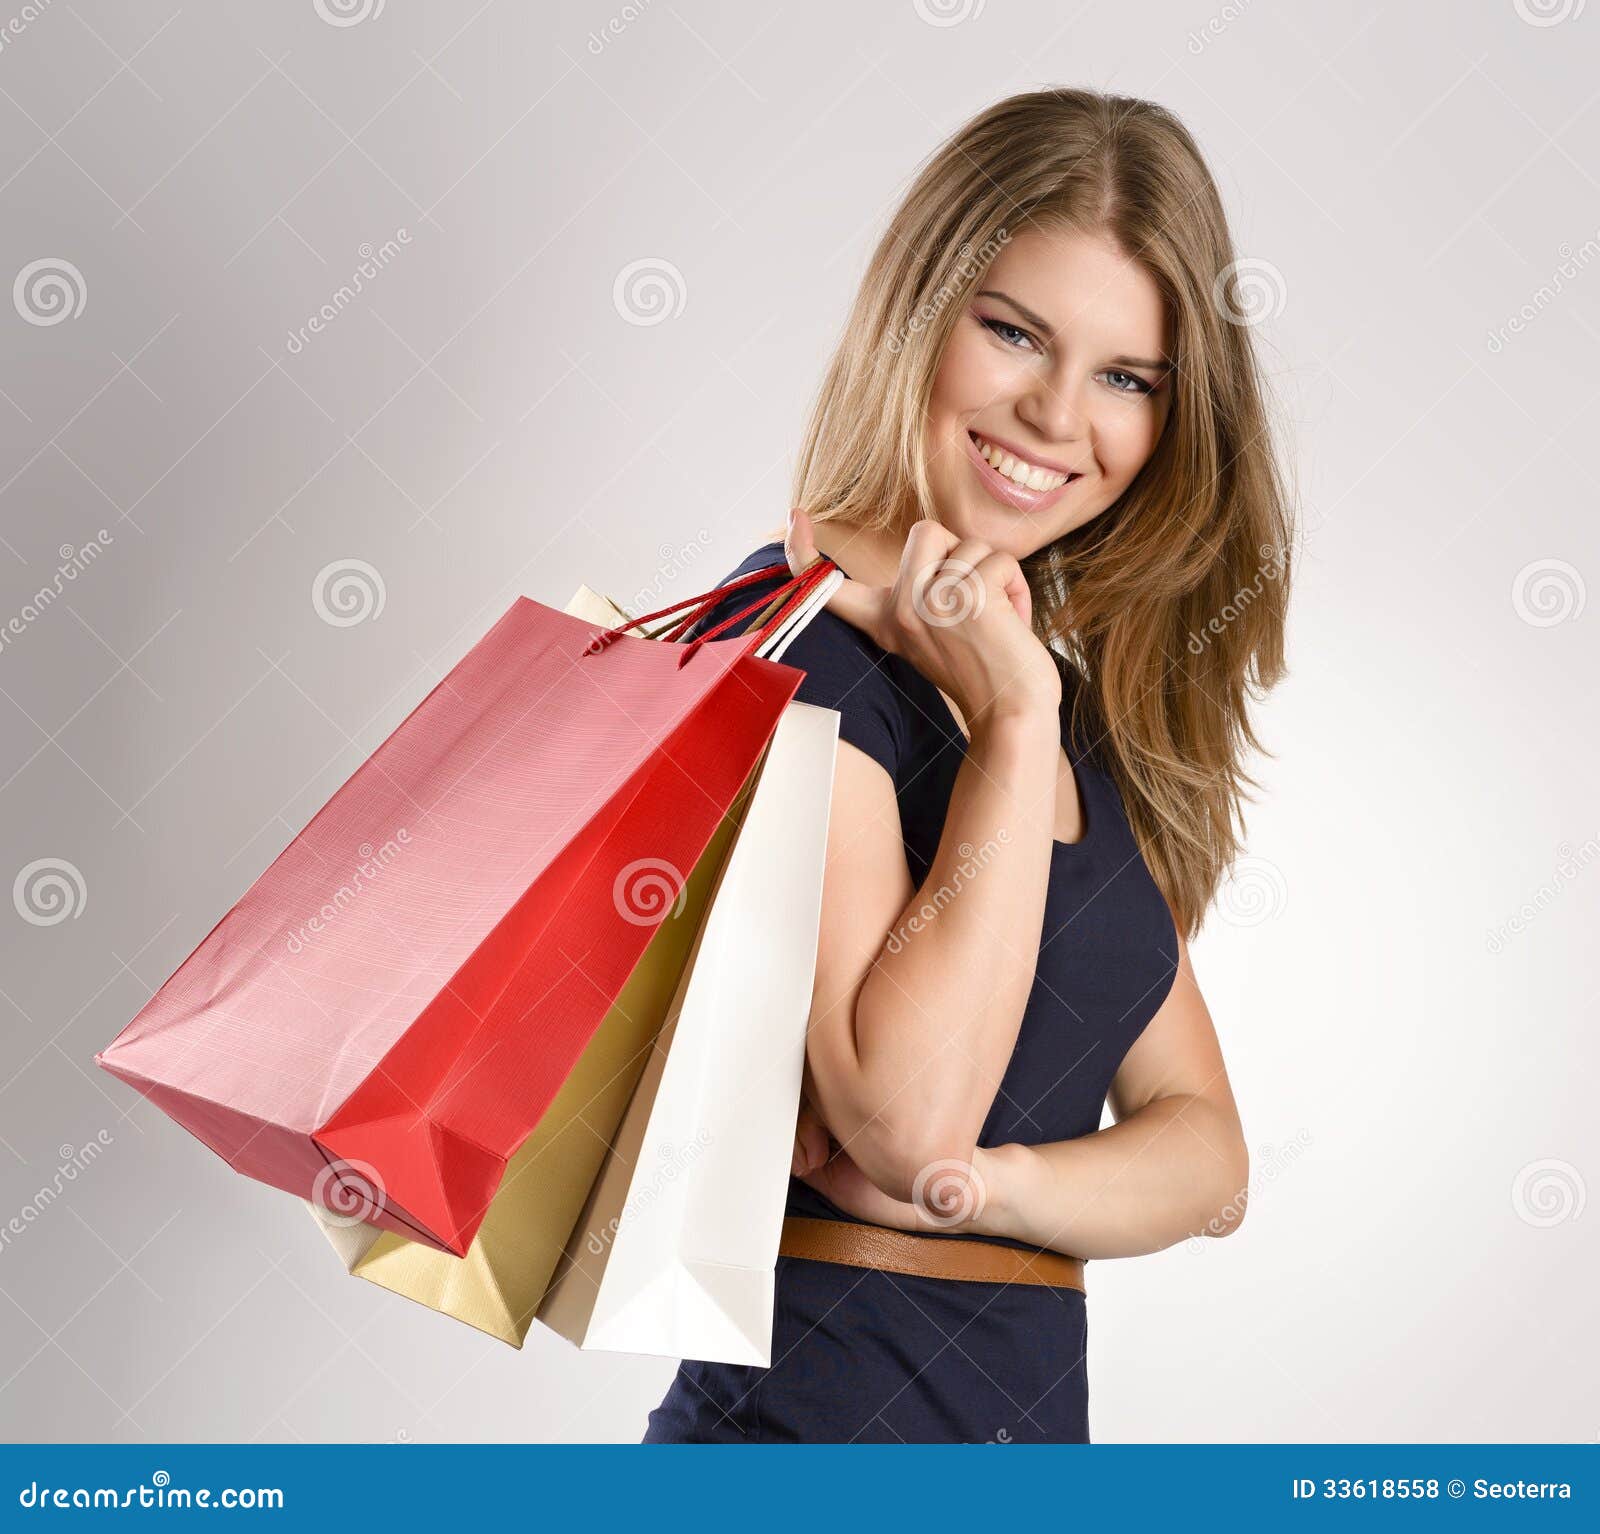 Shopping woman stock photo. Image of sale, caucasian - 33618558